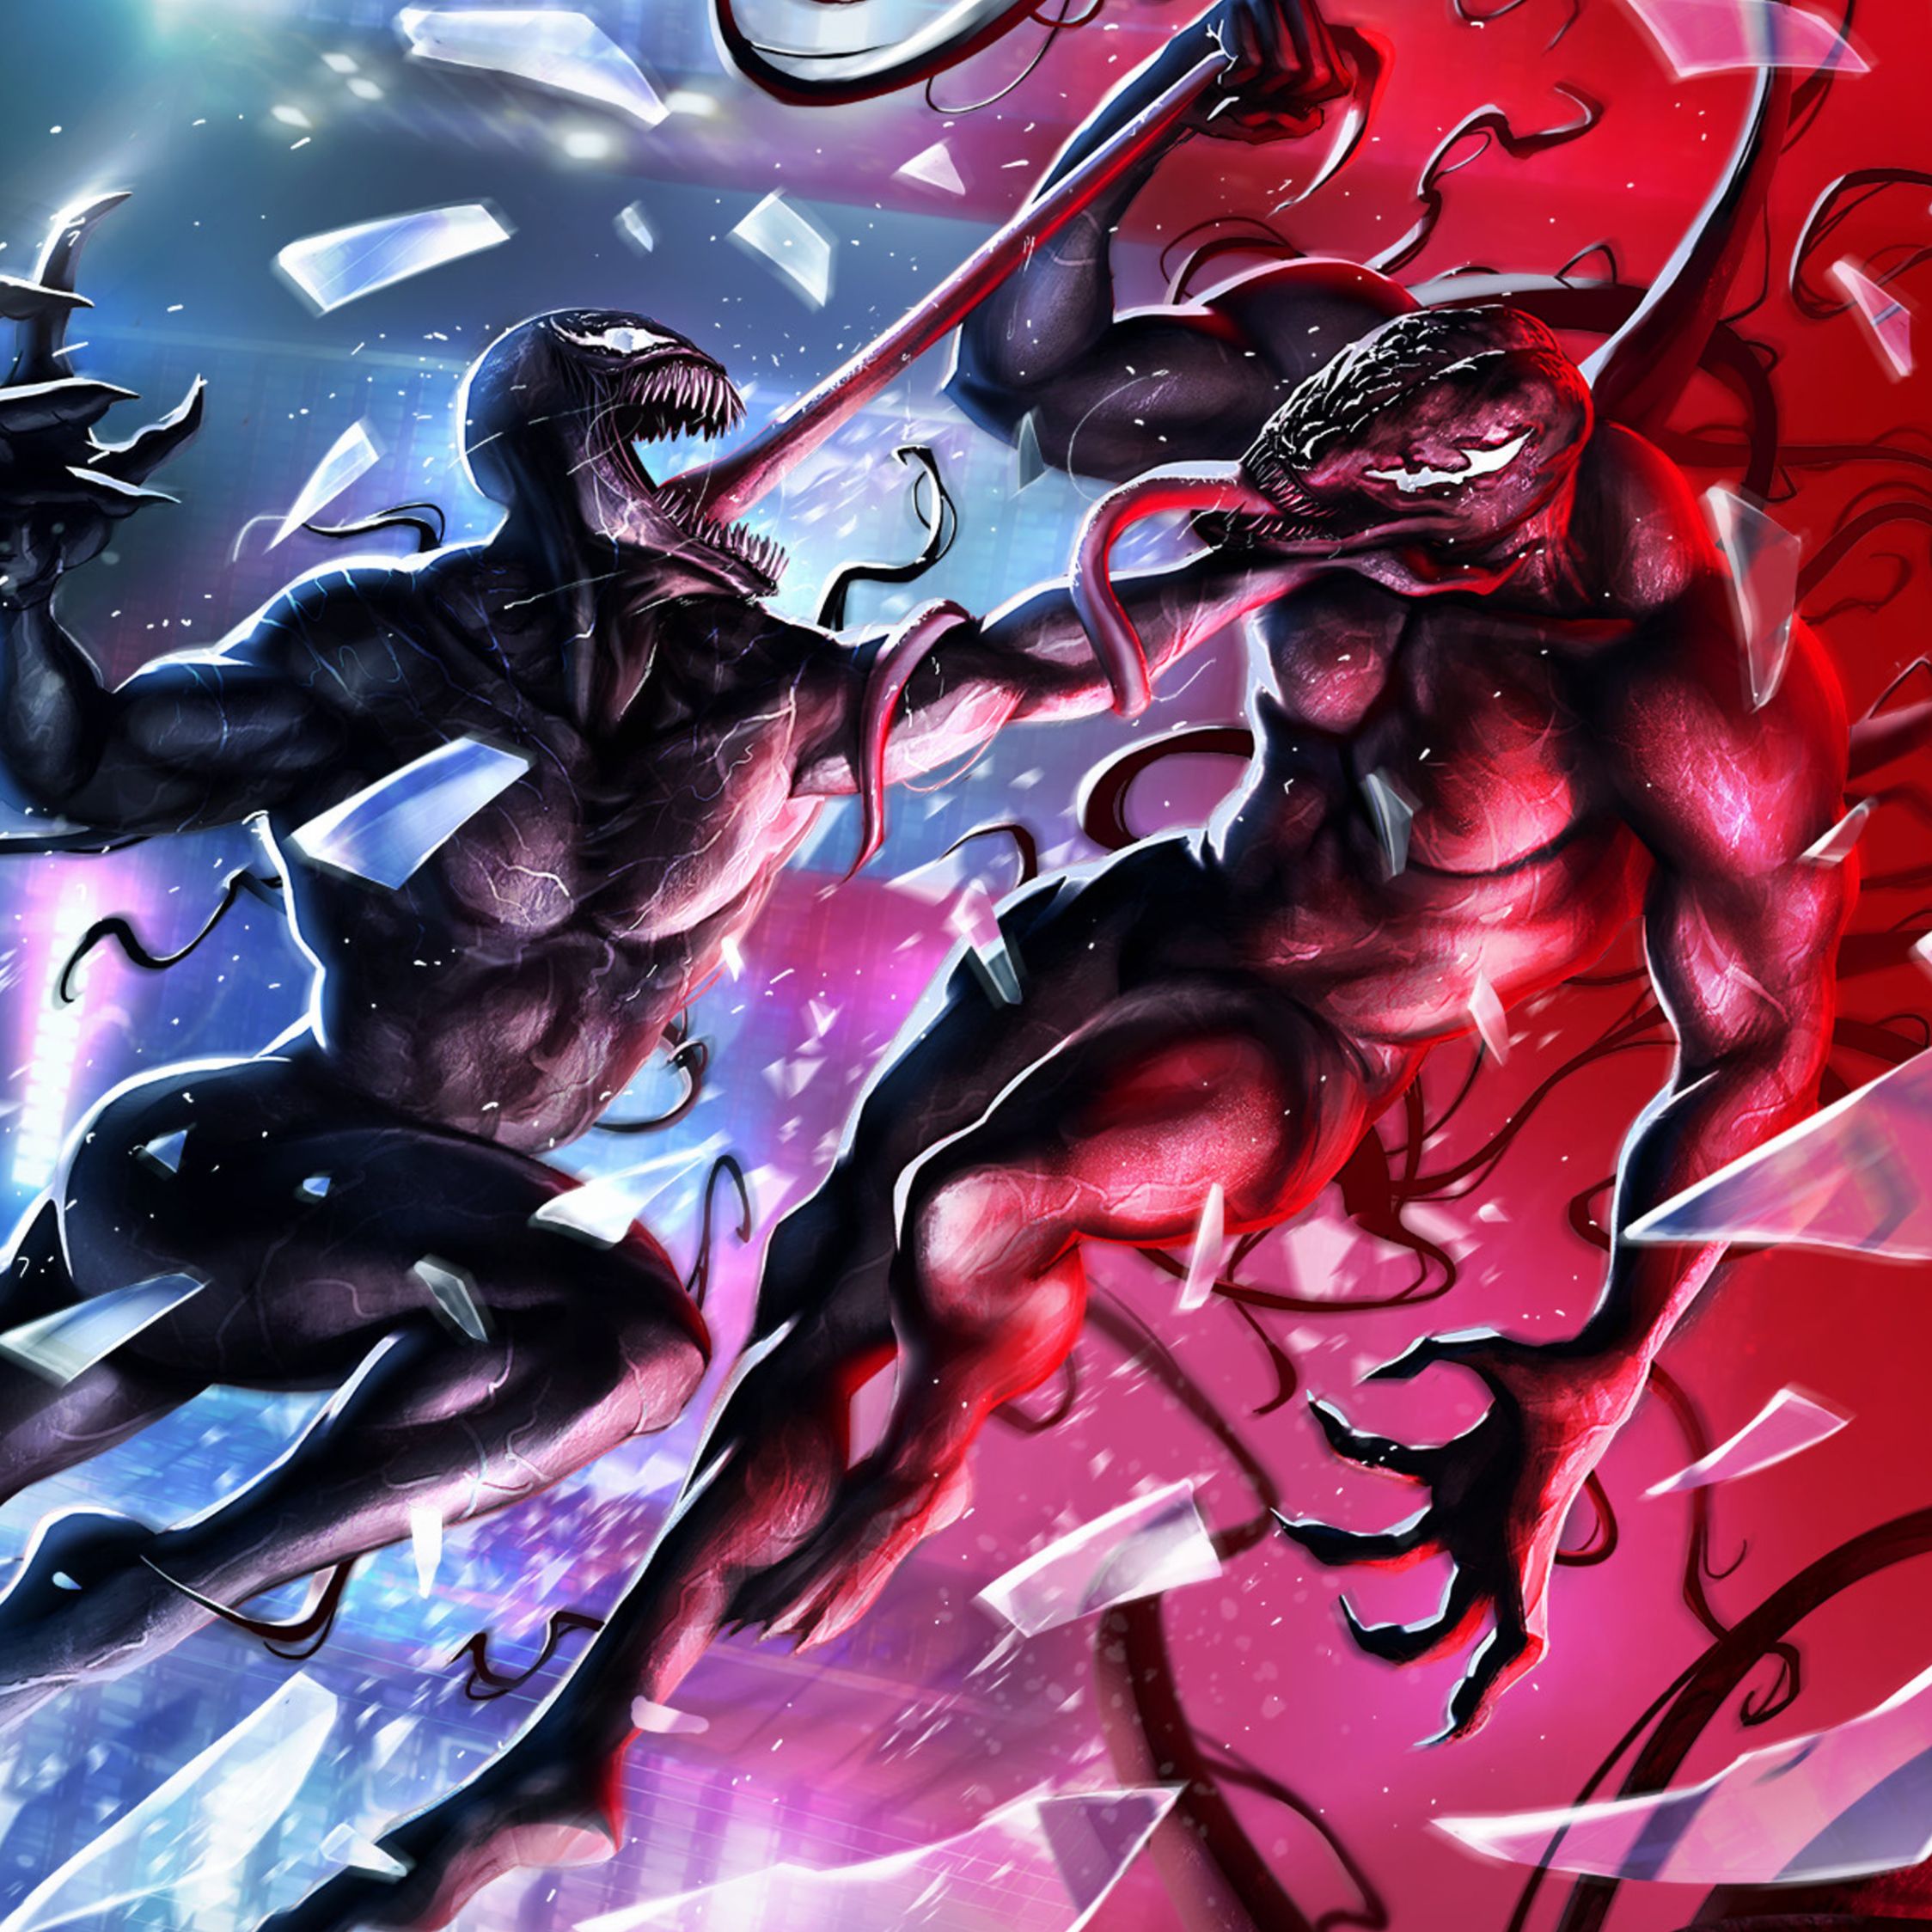 Marvel Riot vs Venom 2248x2248 Resolution Wallpaper, HD Superheroes 4K Wallpaper, Image, Photo and Background